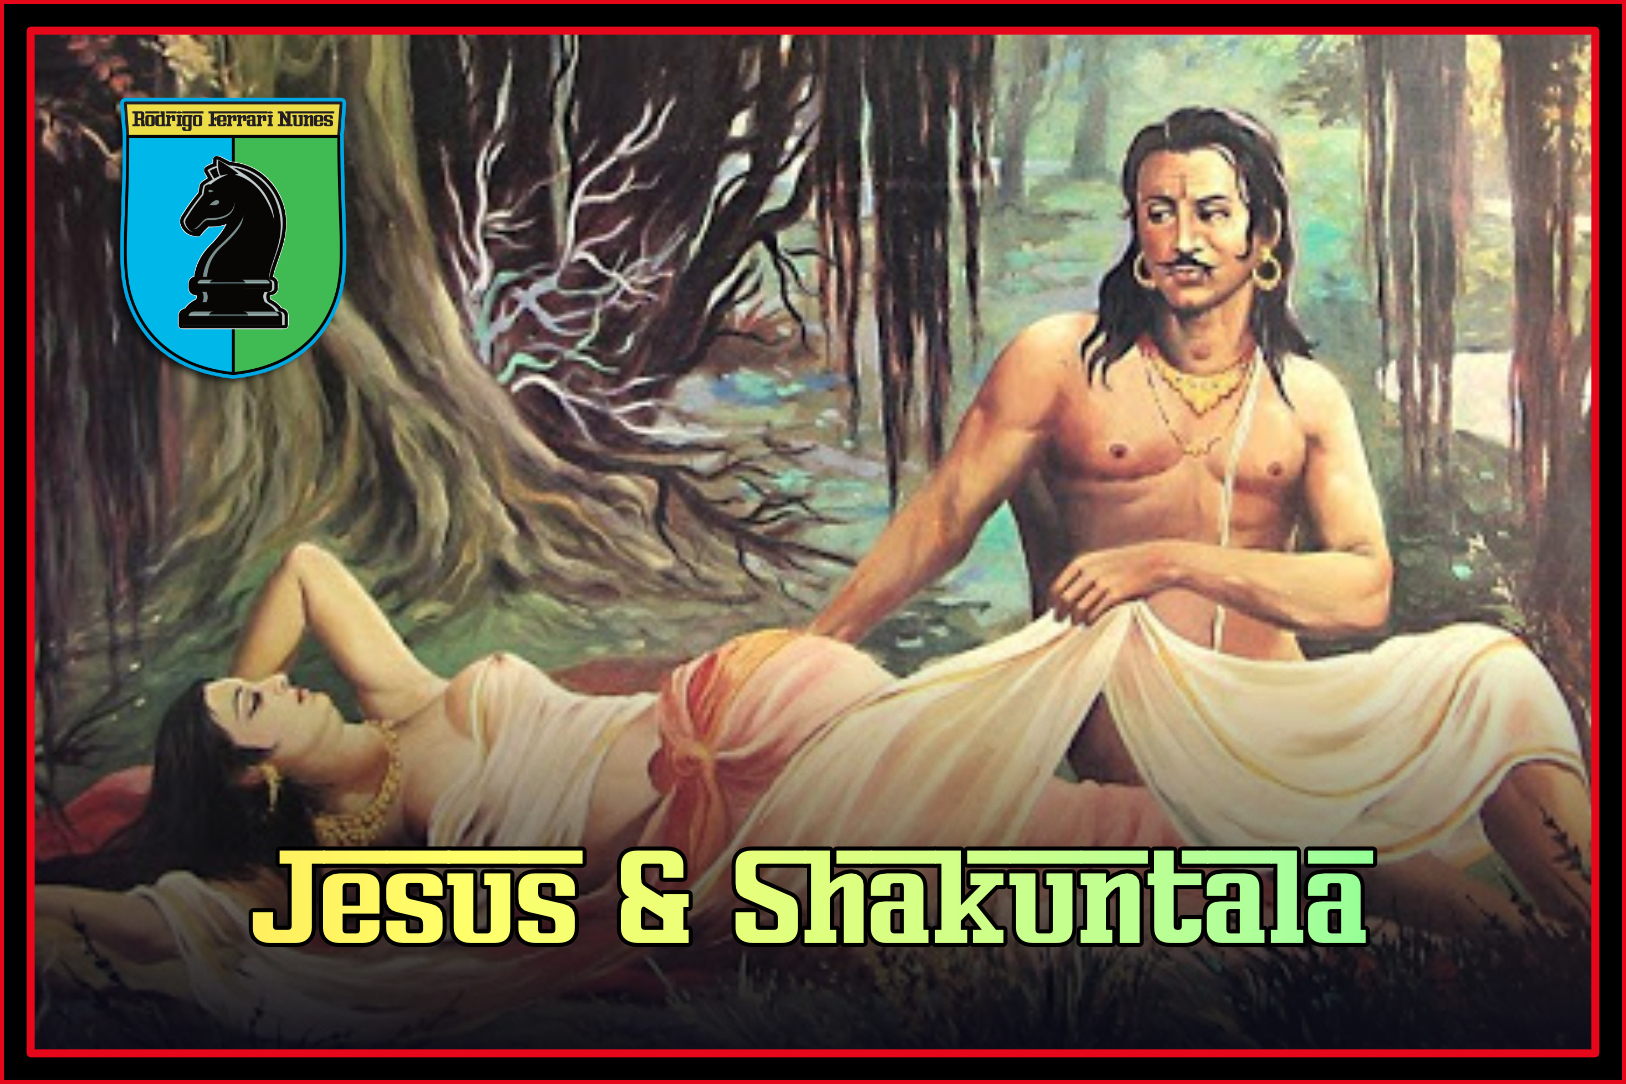 Jesus & Shakuntala